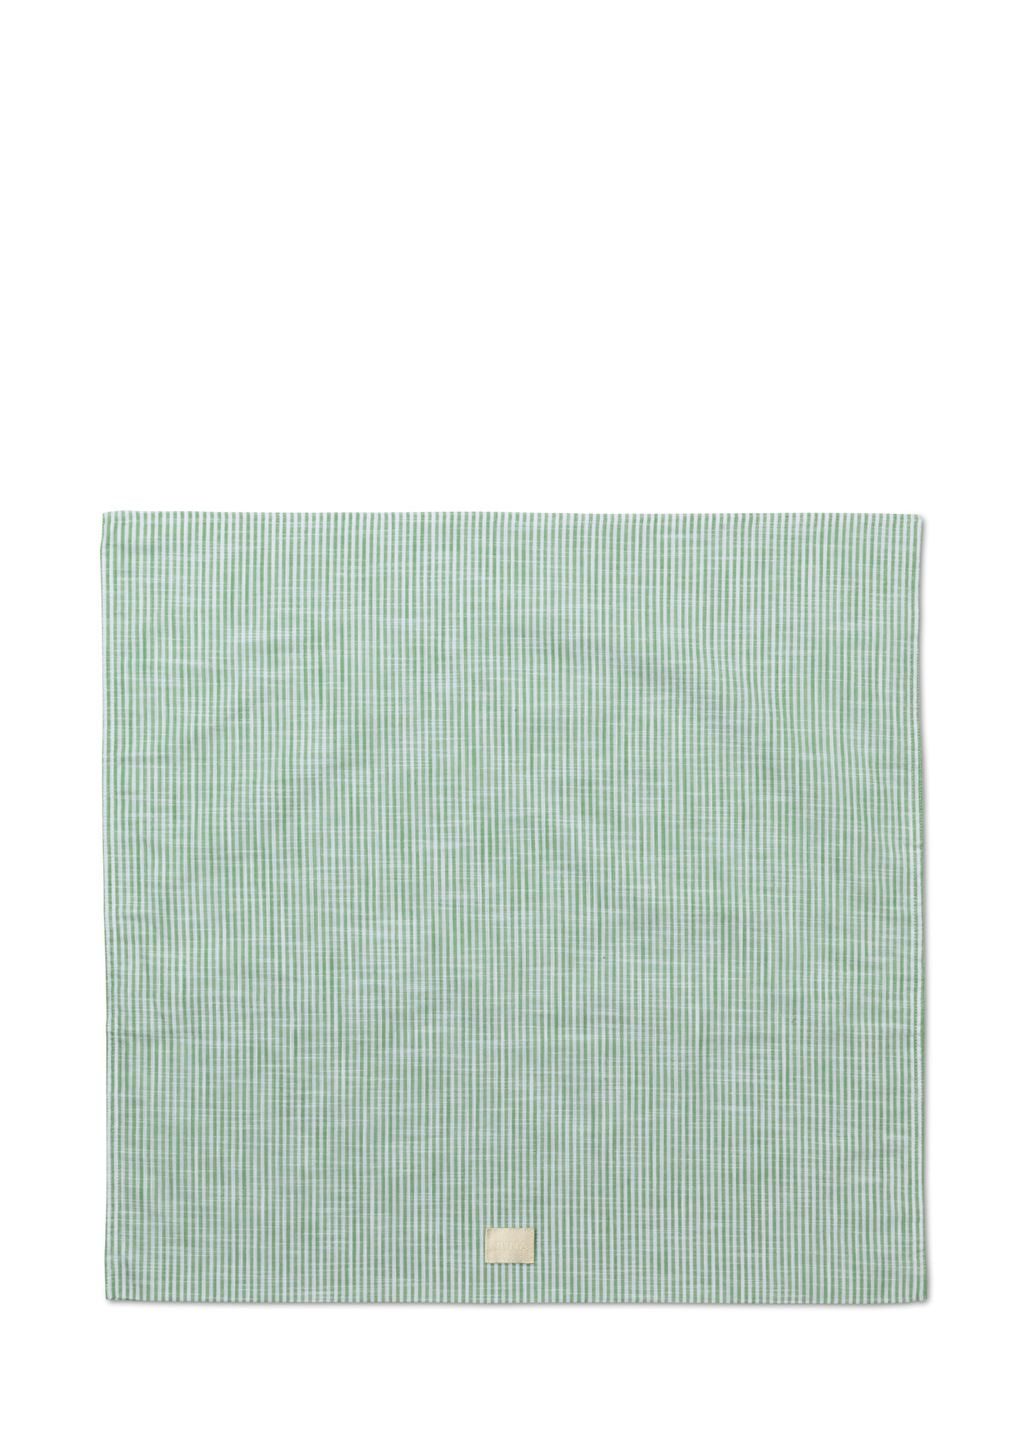 Juna Monochrome Linien Kissenbezug 63 X60 Cm, Grün/Weiß